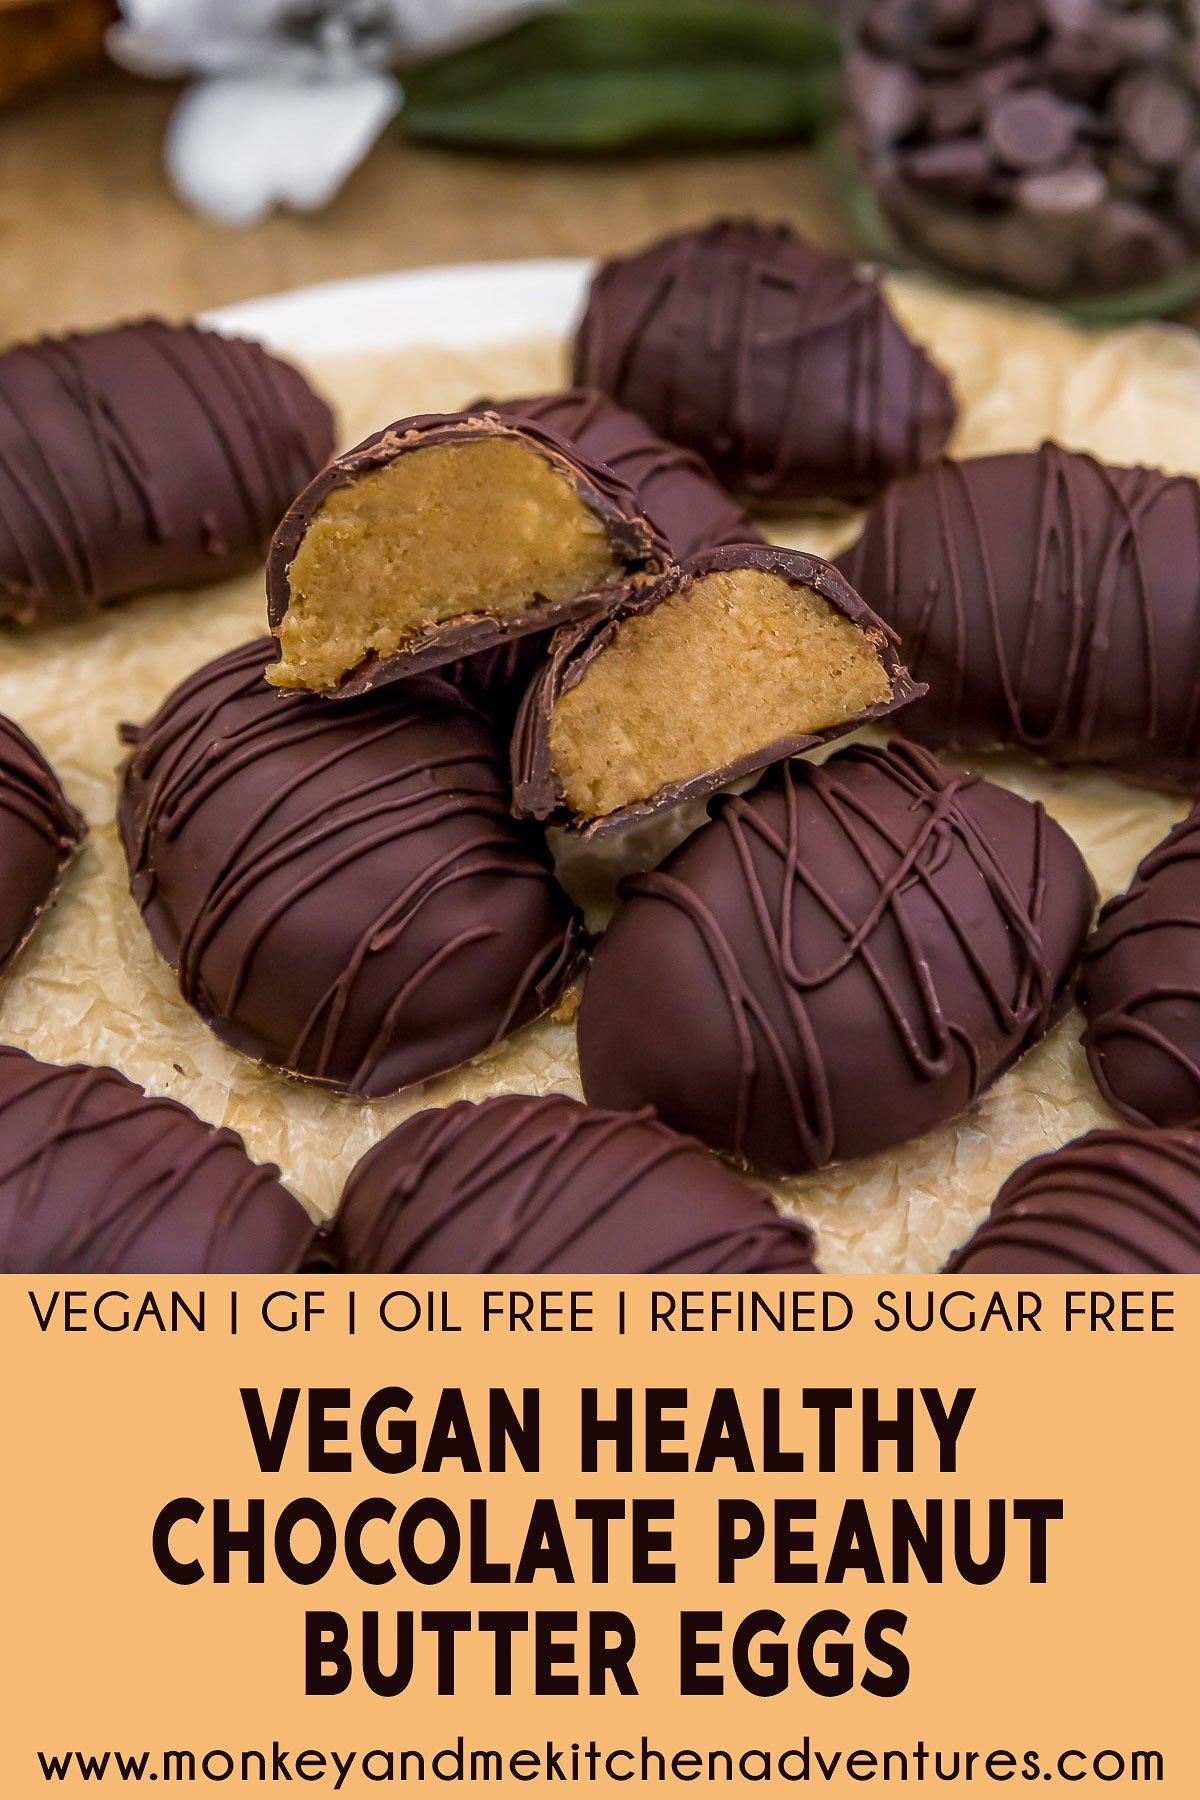 Vegan Healthy Chocolate Peanut Butter Eggs with Text Description